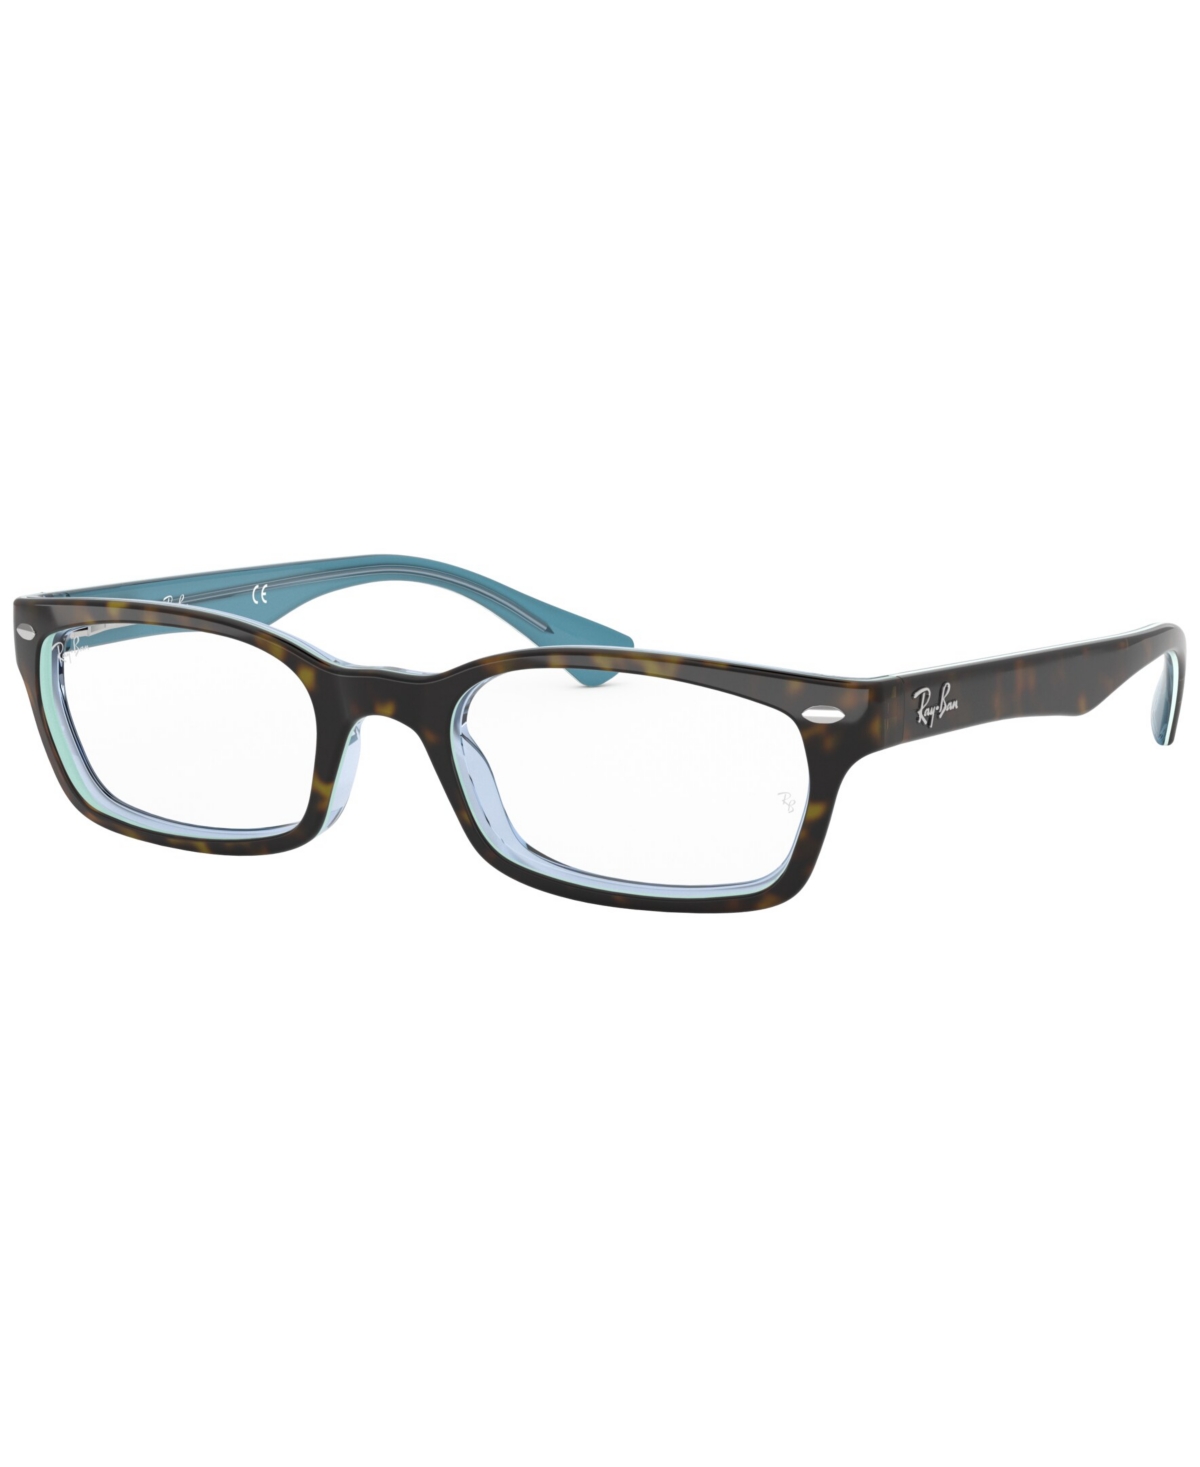 RX5150 Unisex Rectangle Eyeglasses - Tortoise